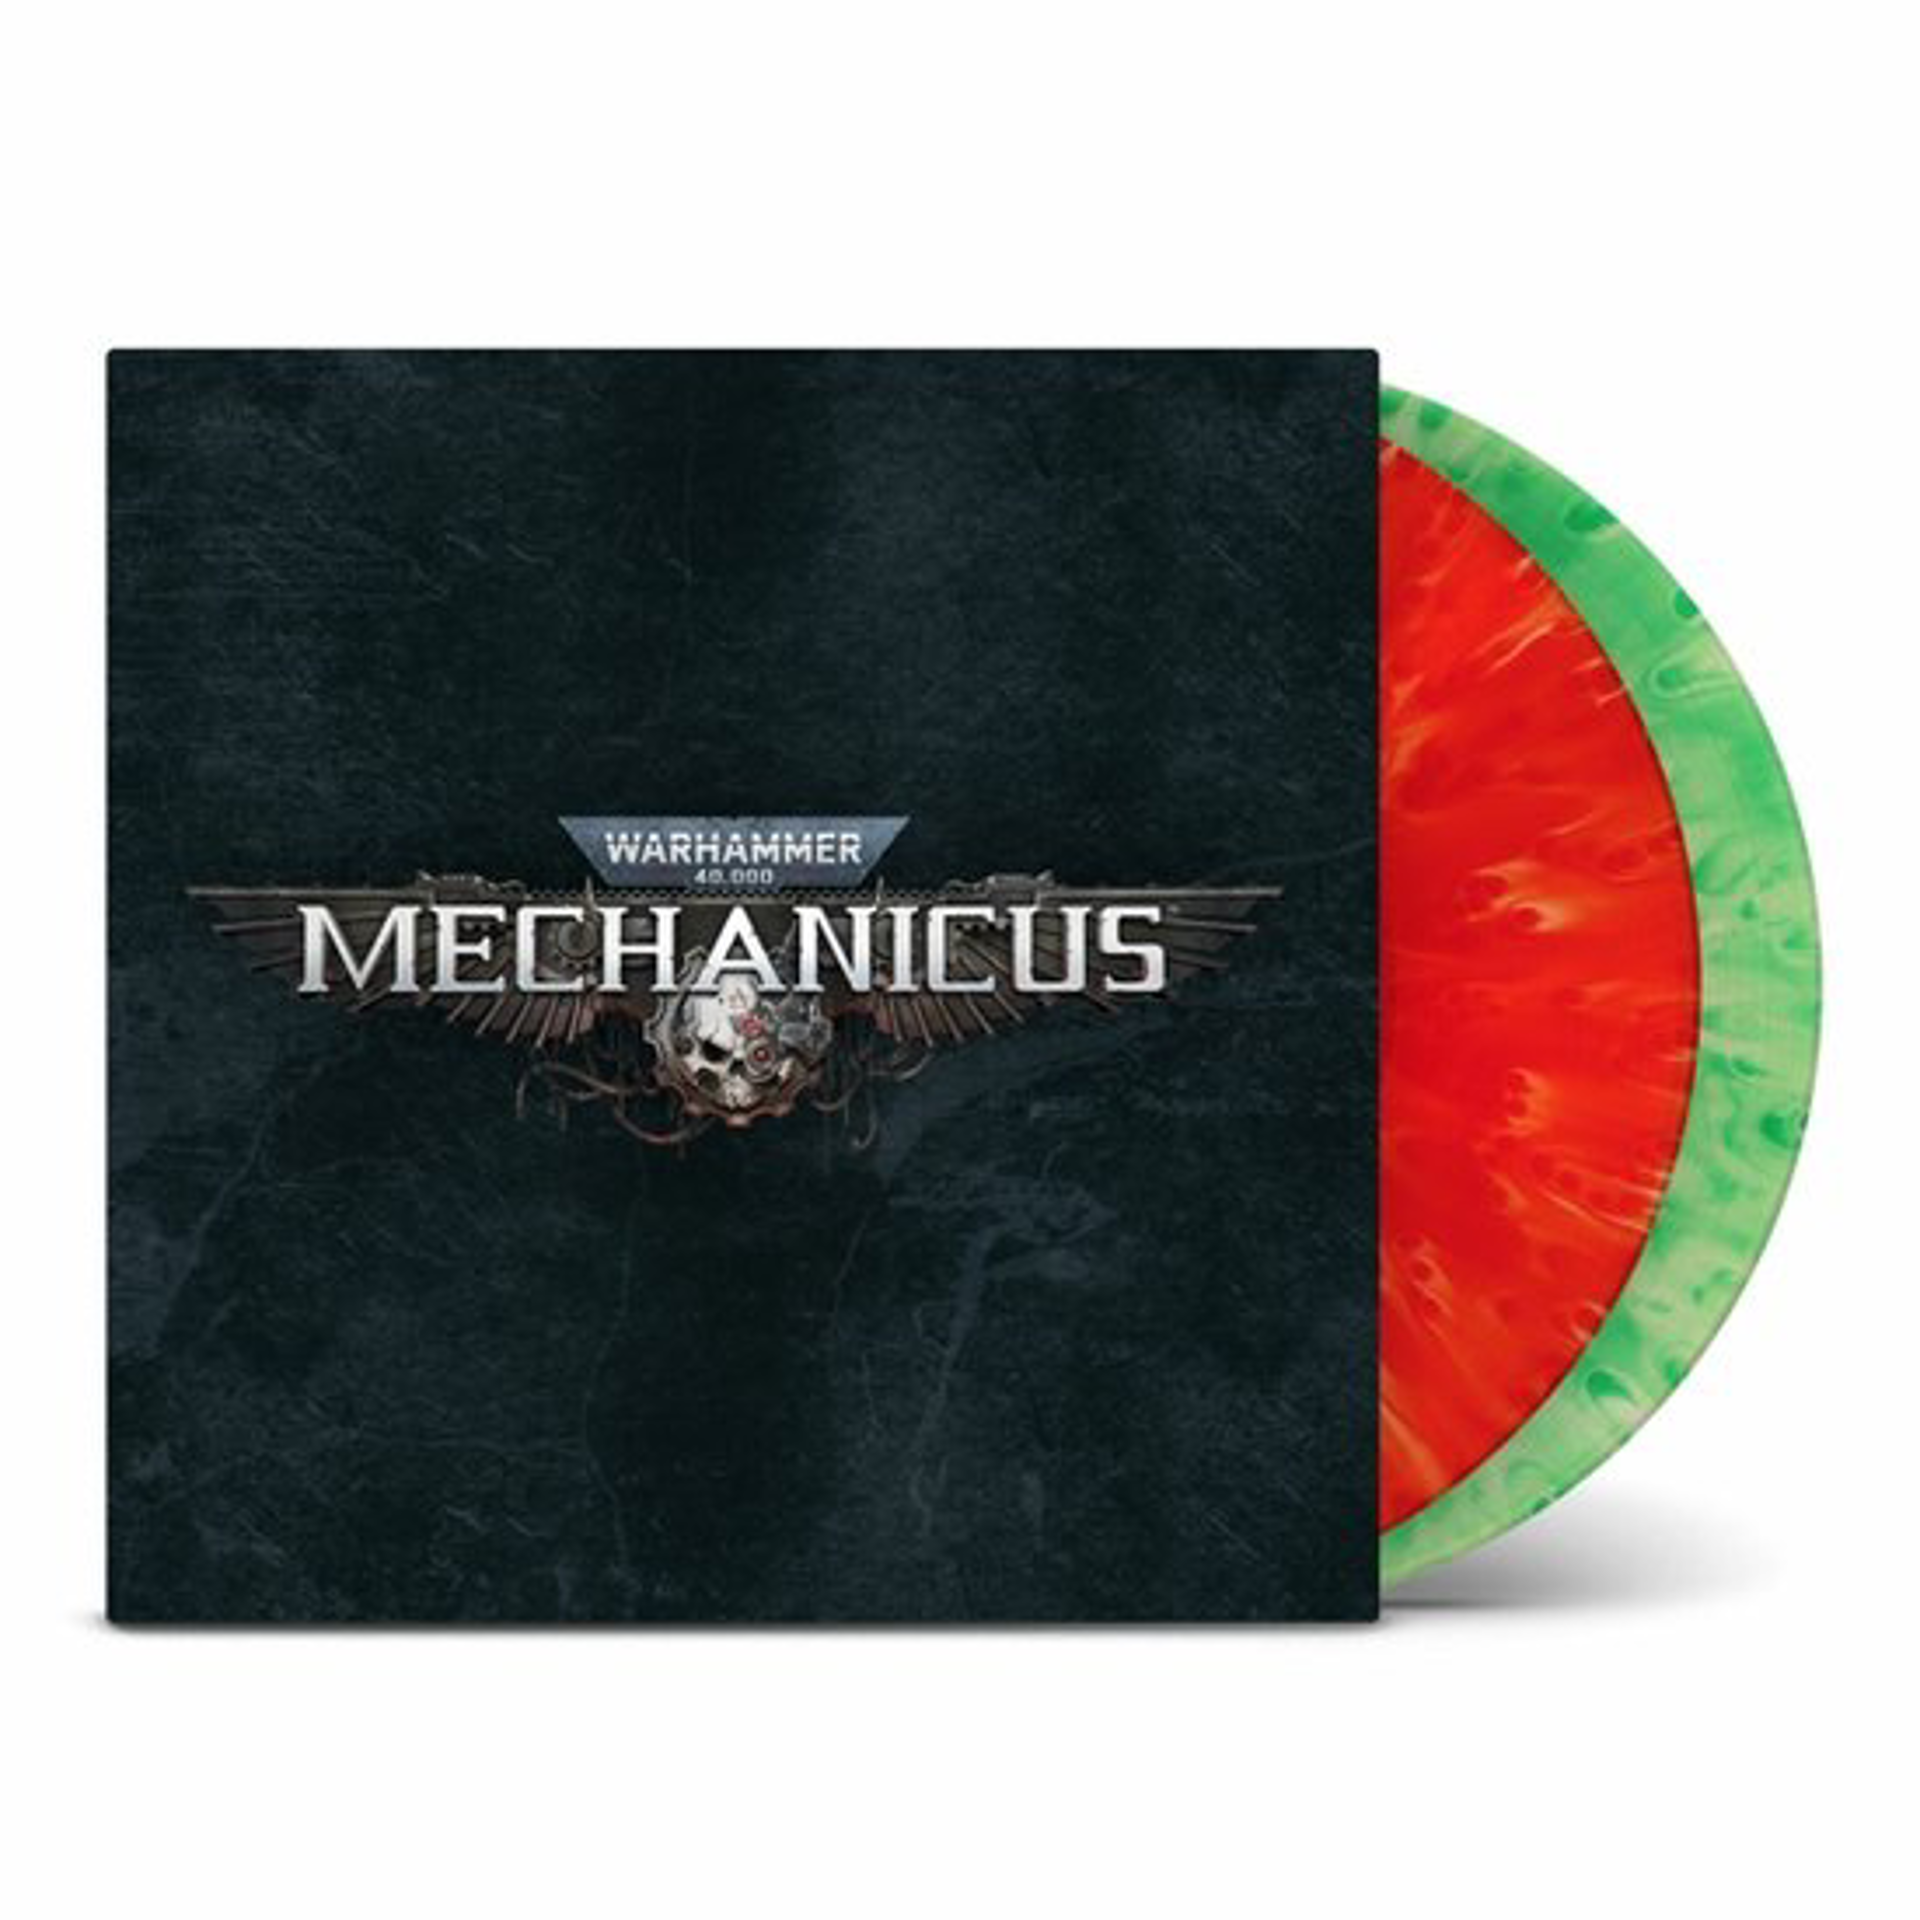 Warhammer 40,000: Mechanicus - Original Soundtrack - 2-LP Red & Green Vinyl